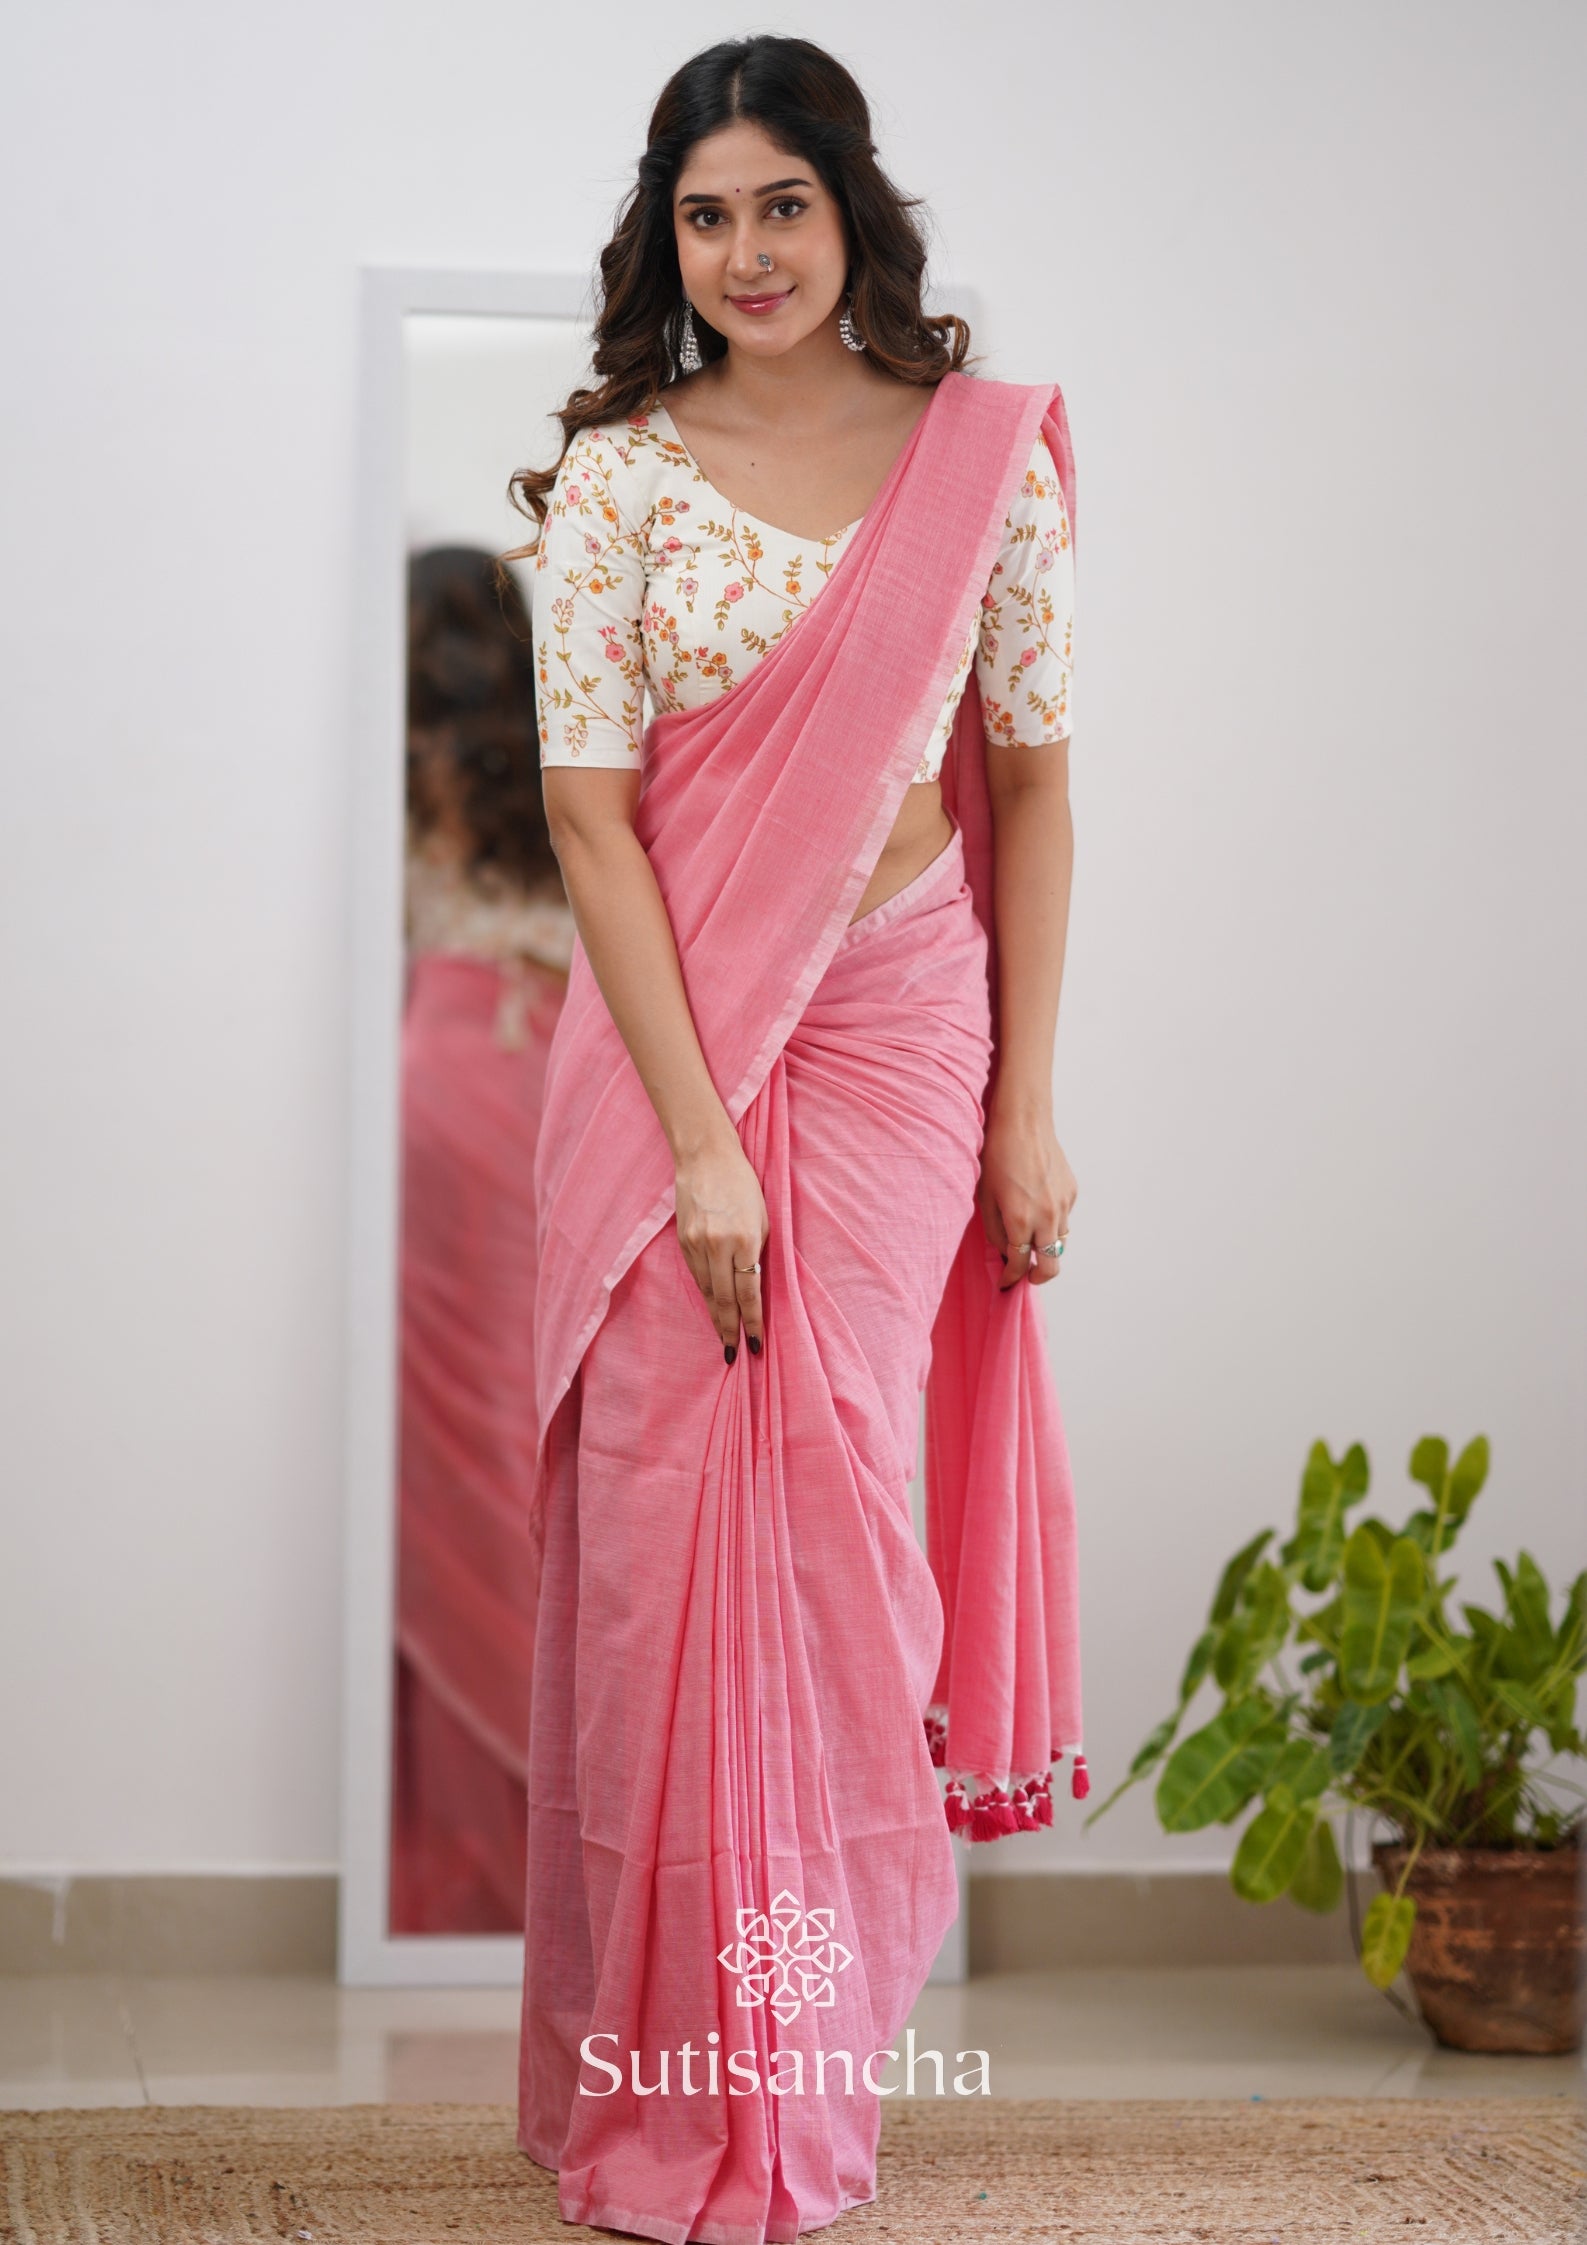 Sutisancha Peach Handloom Cotton Saree With Designer Blouse